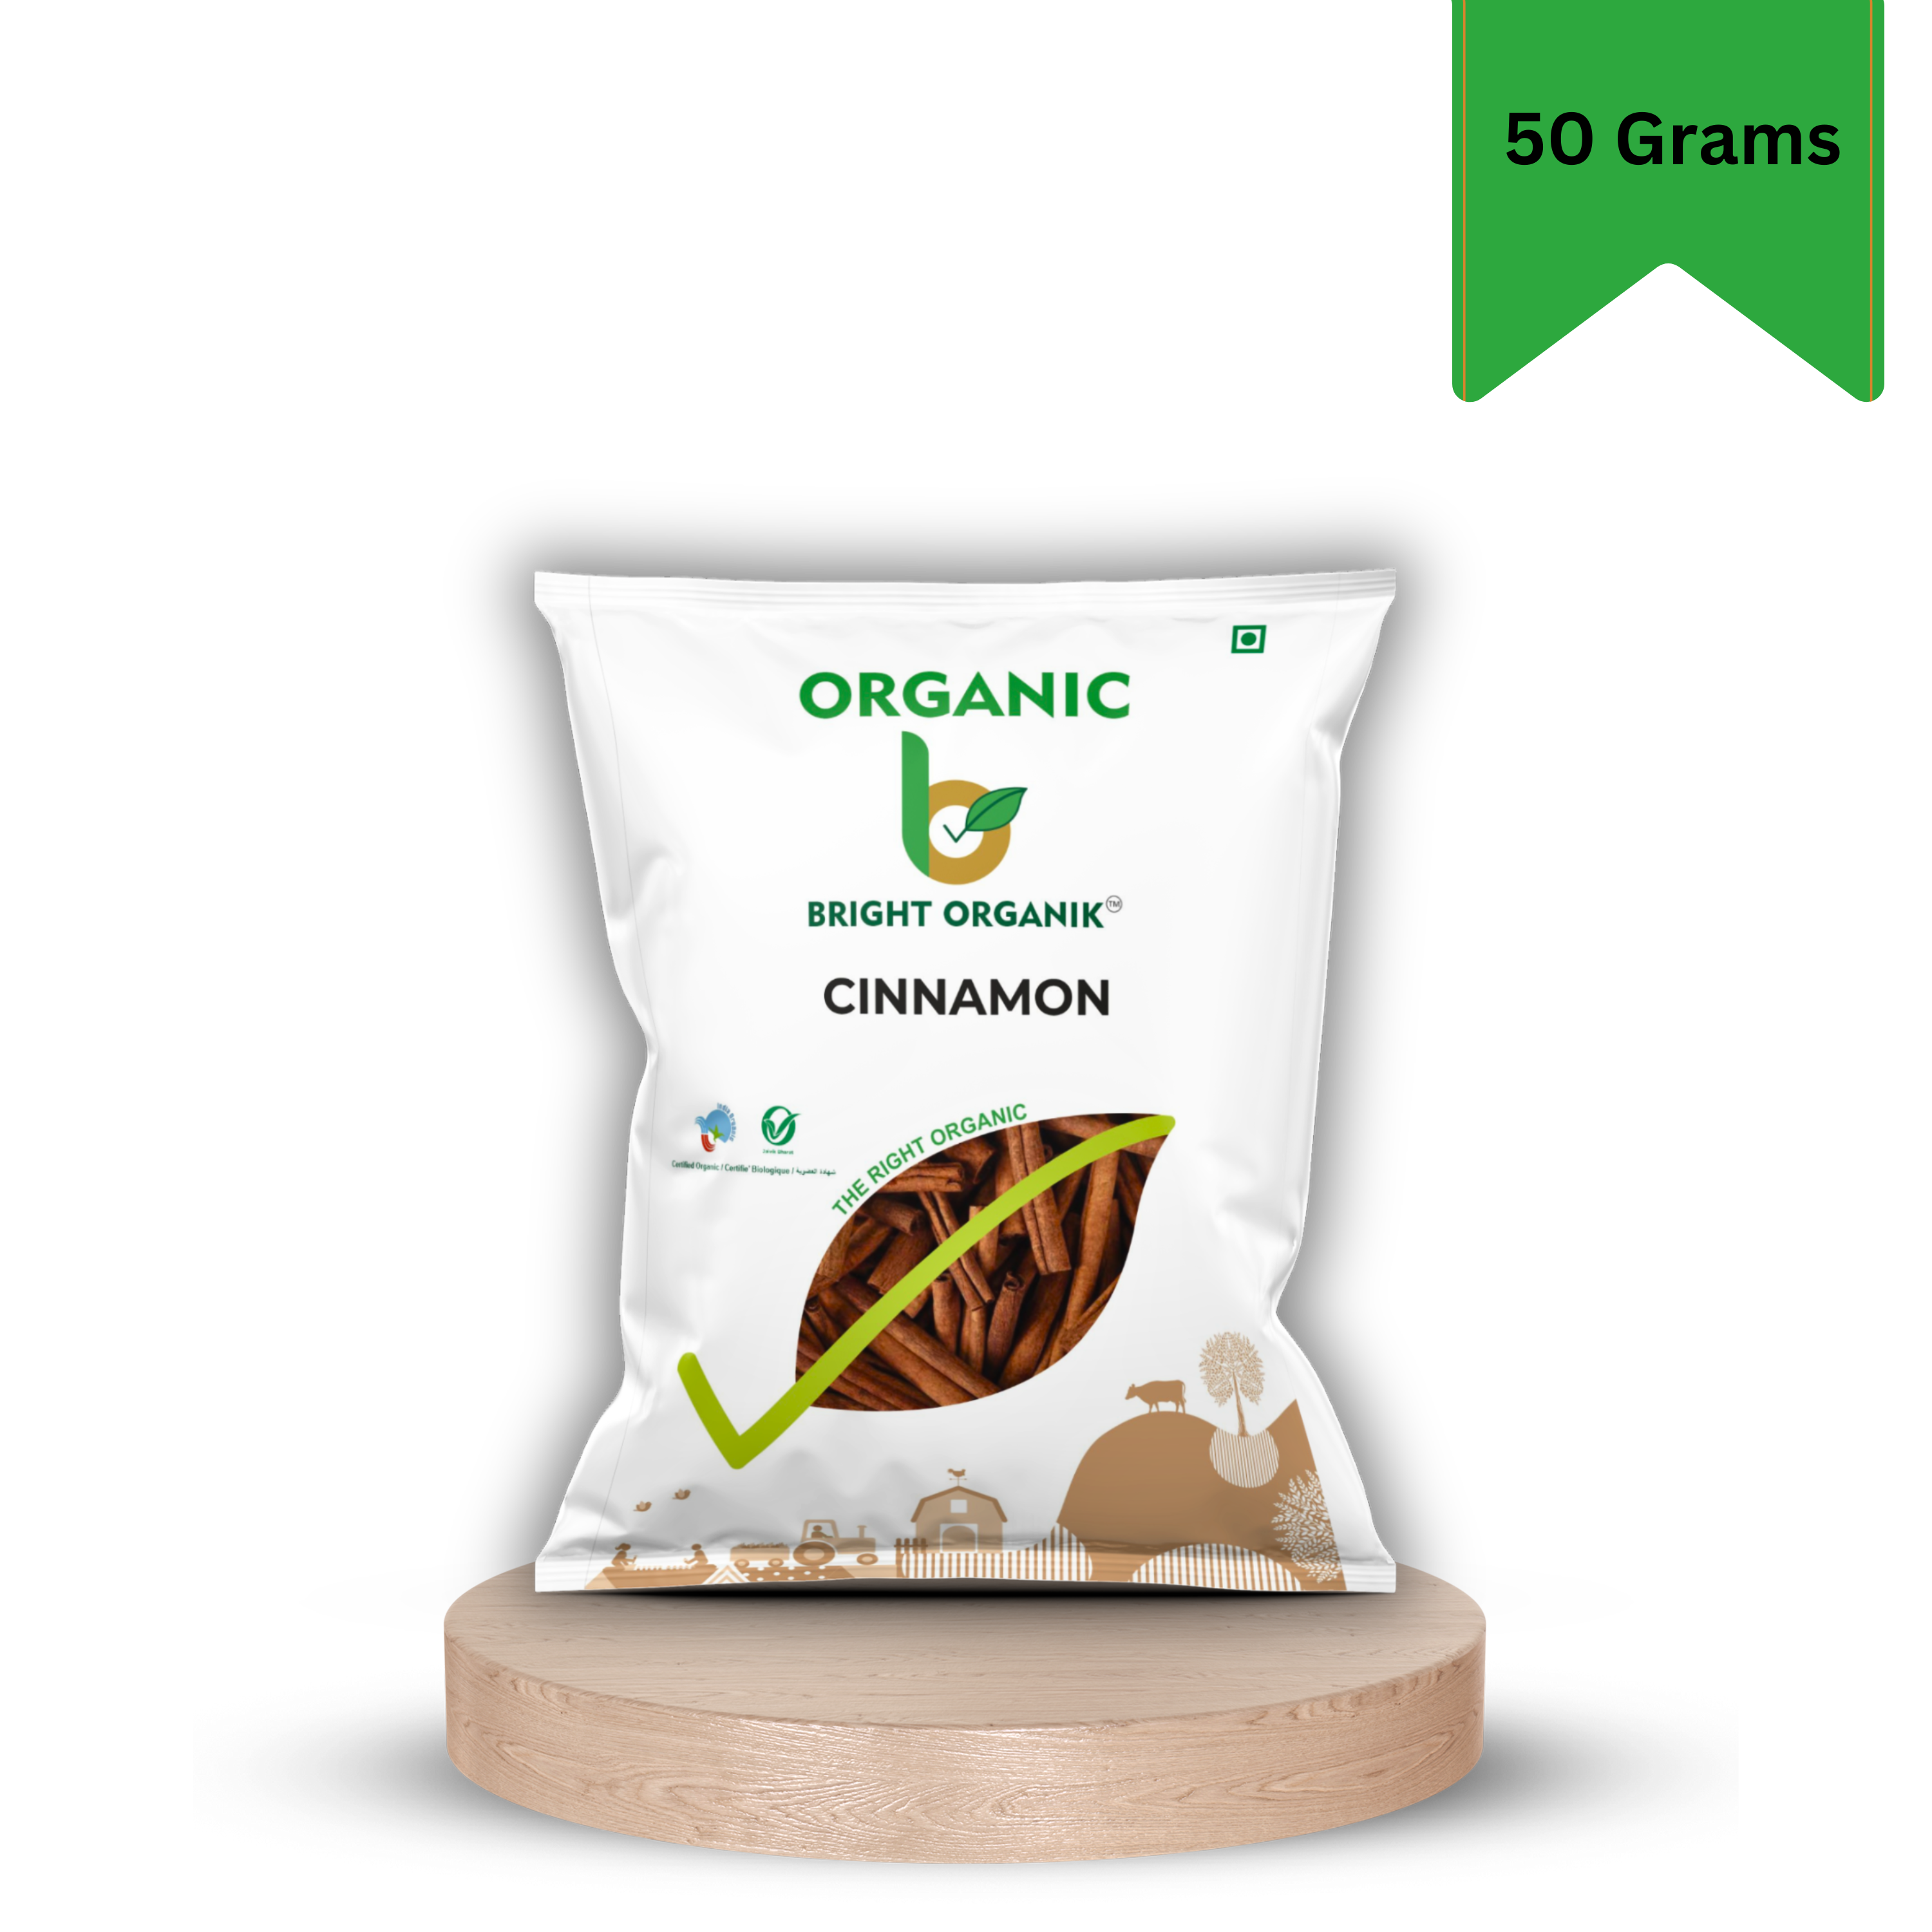 Organic Cinnamon packets for 100 grams